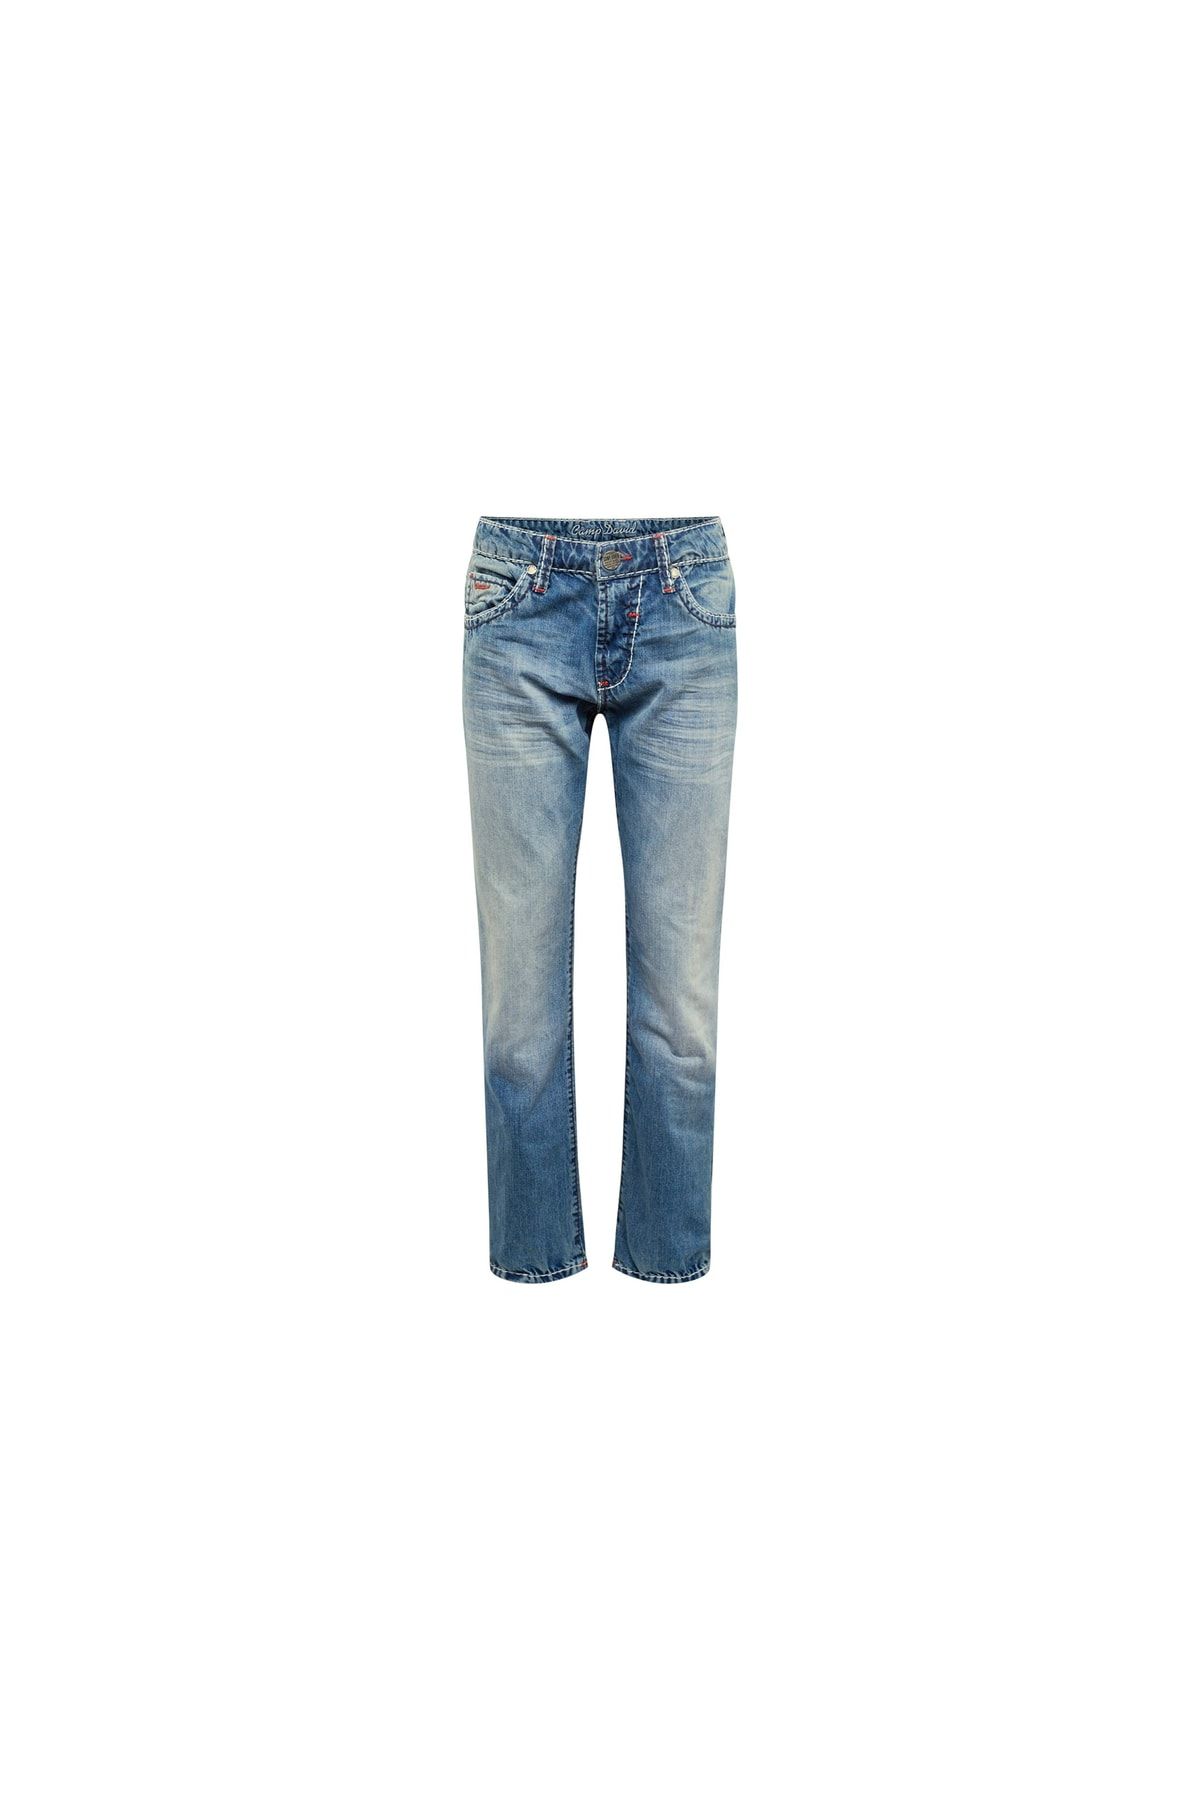 David Jeans Camp Stylishe shoppen Denim–Mode | Trendyol – online